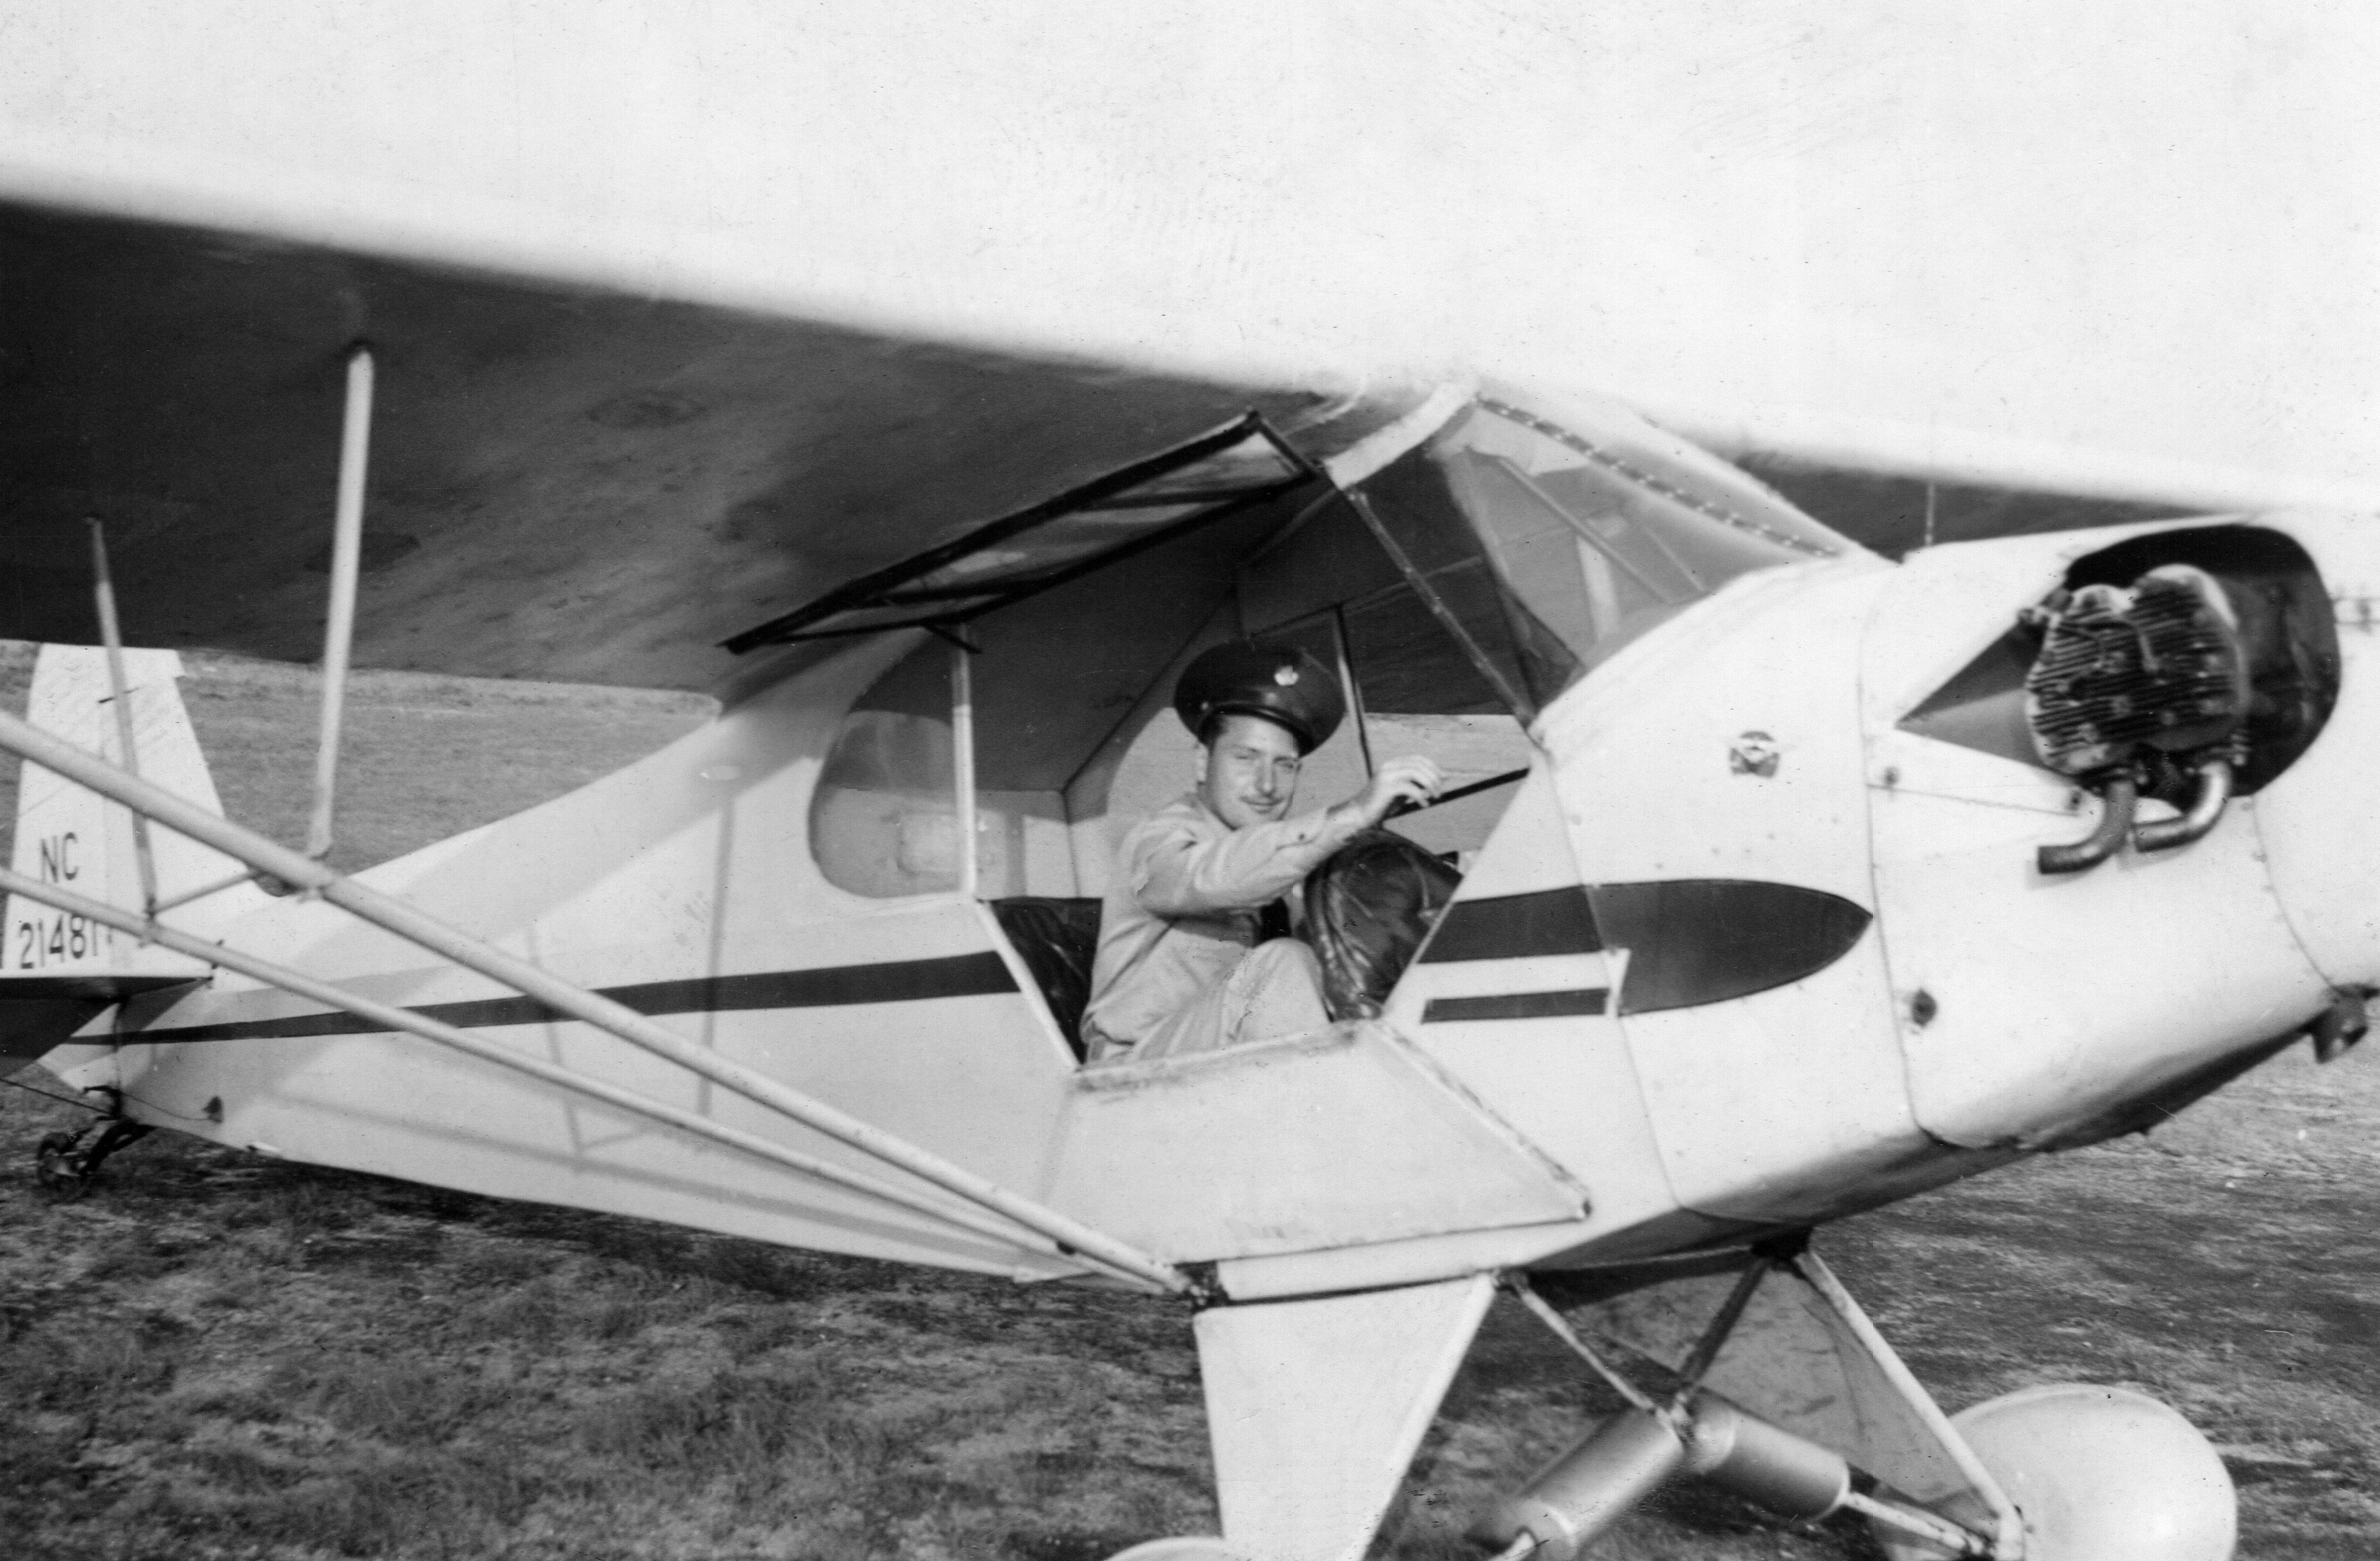 D.W. Sparks & His Piper Cub Airplane